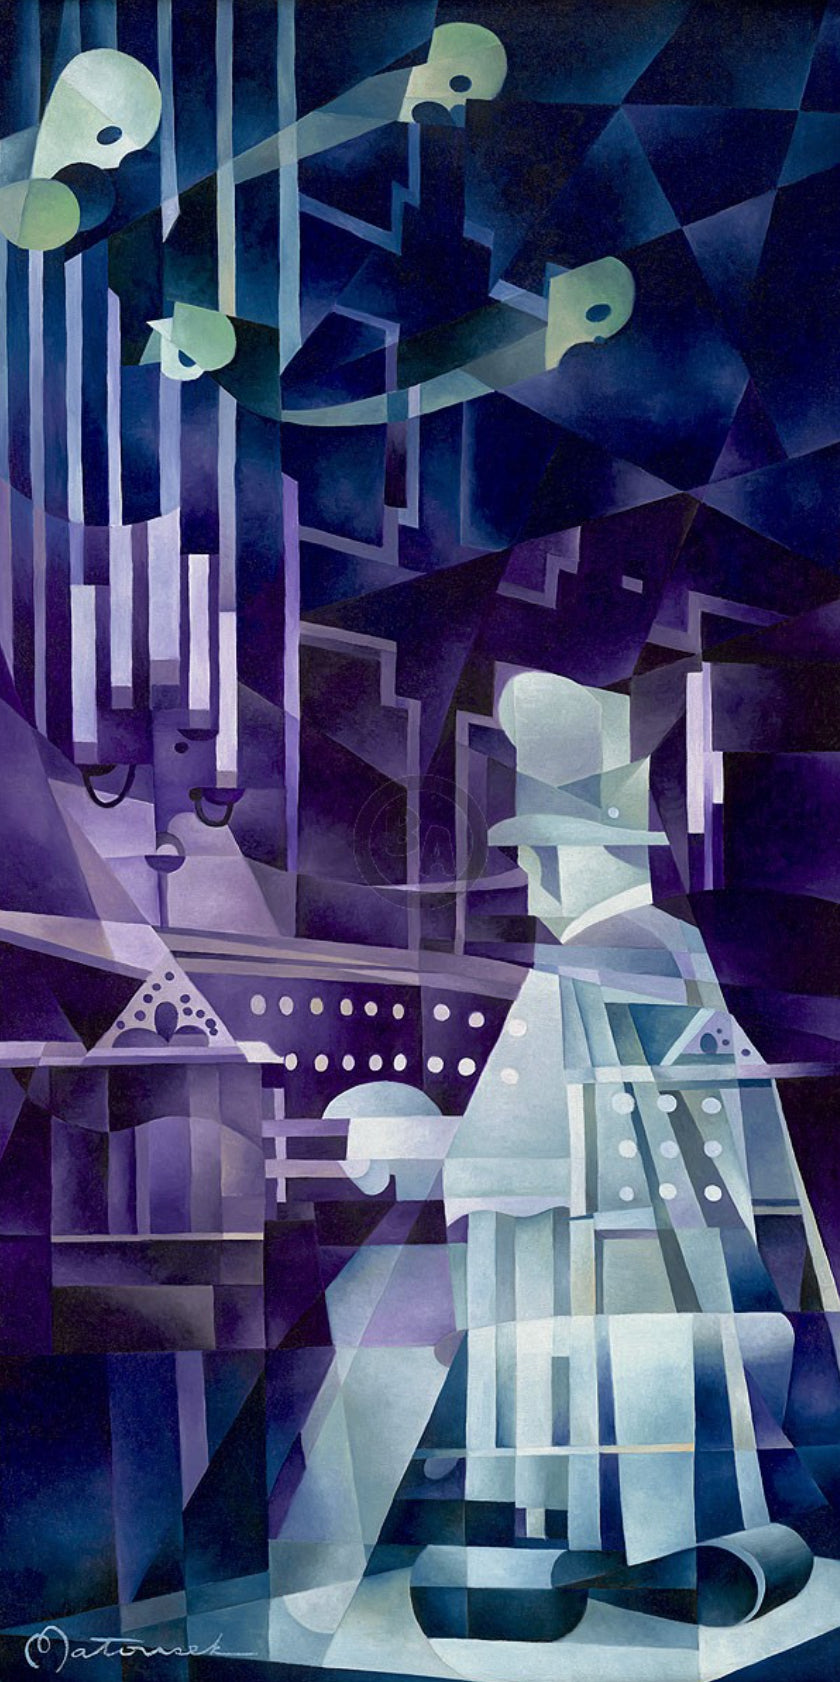 Disney World Walt Disney Fine Art Tom Matousek Signed Limited Edition of 195 on Canvas "The Organist"